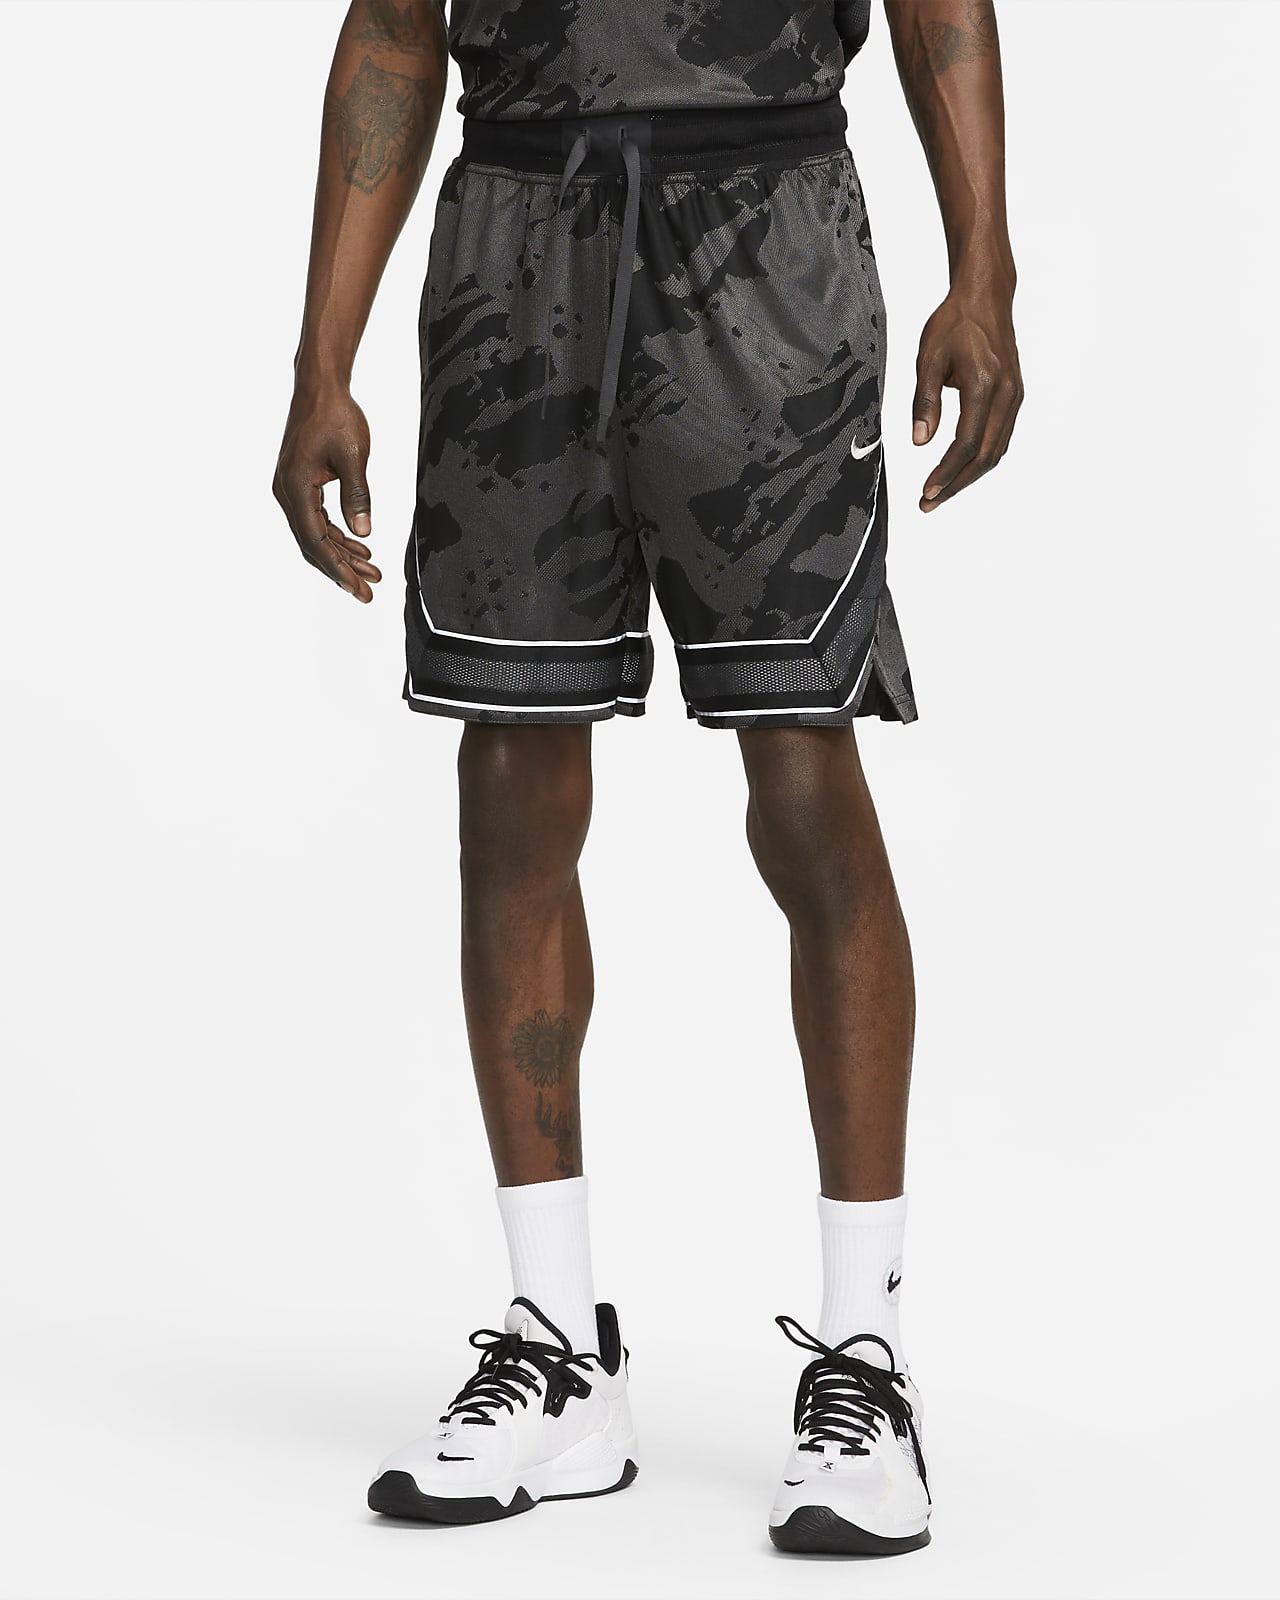 Rebobinar extraño dueño Nike Dri-FIT ADV Pantalón corto de baloncesto de 20 cm - Hombre. Nike ES